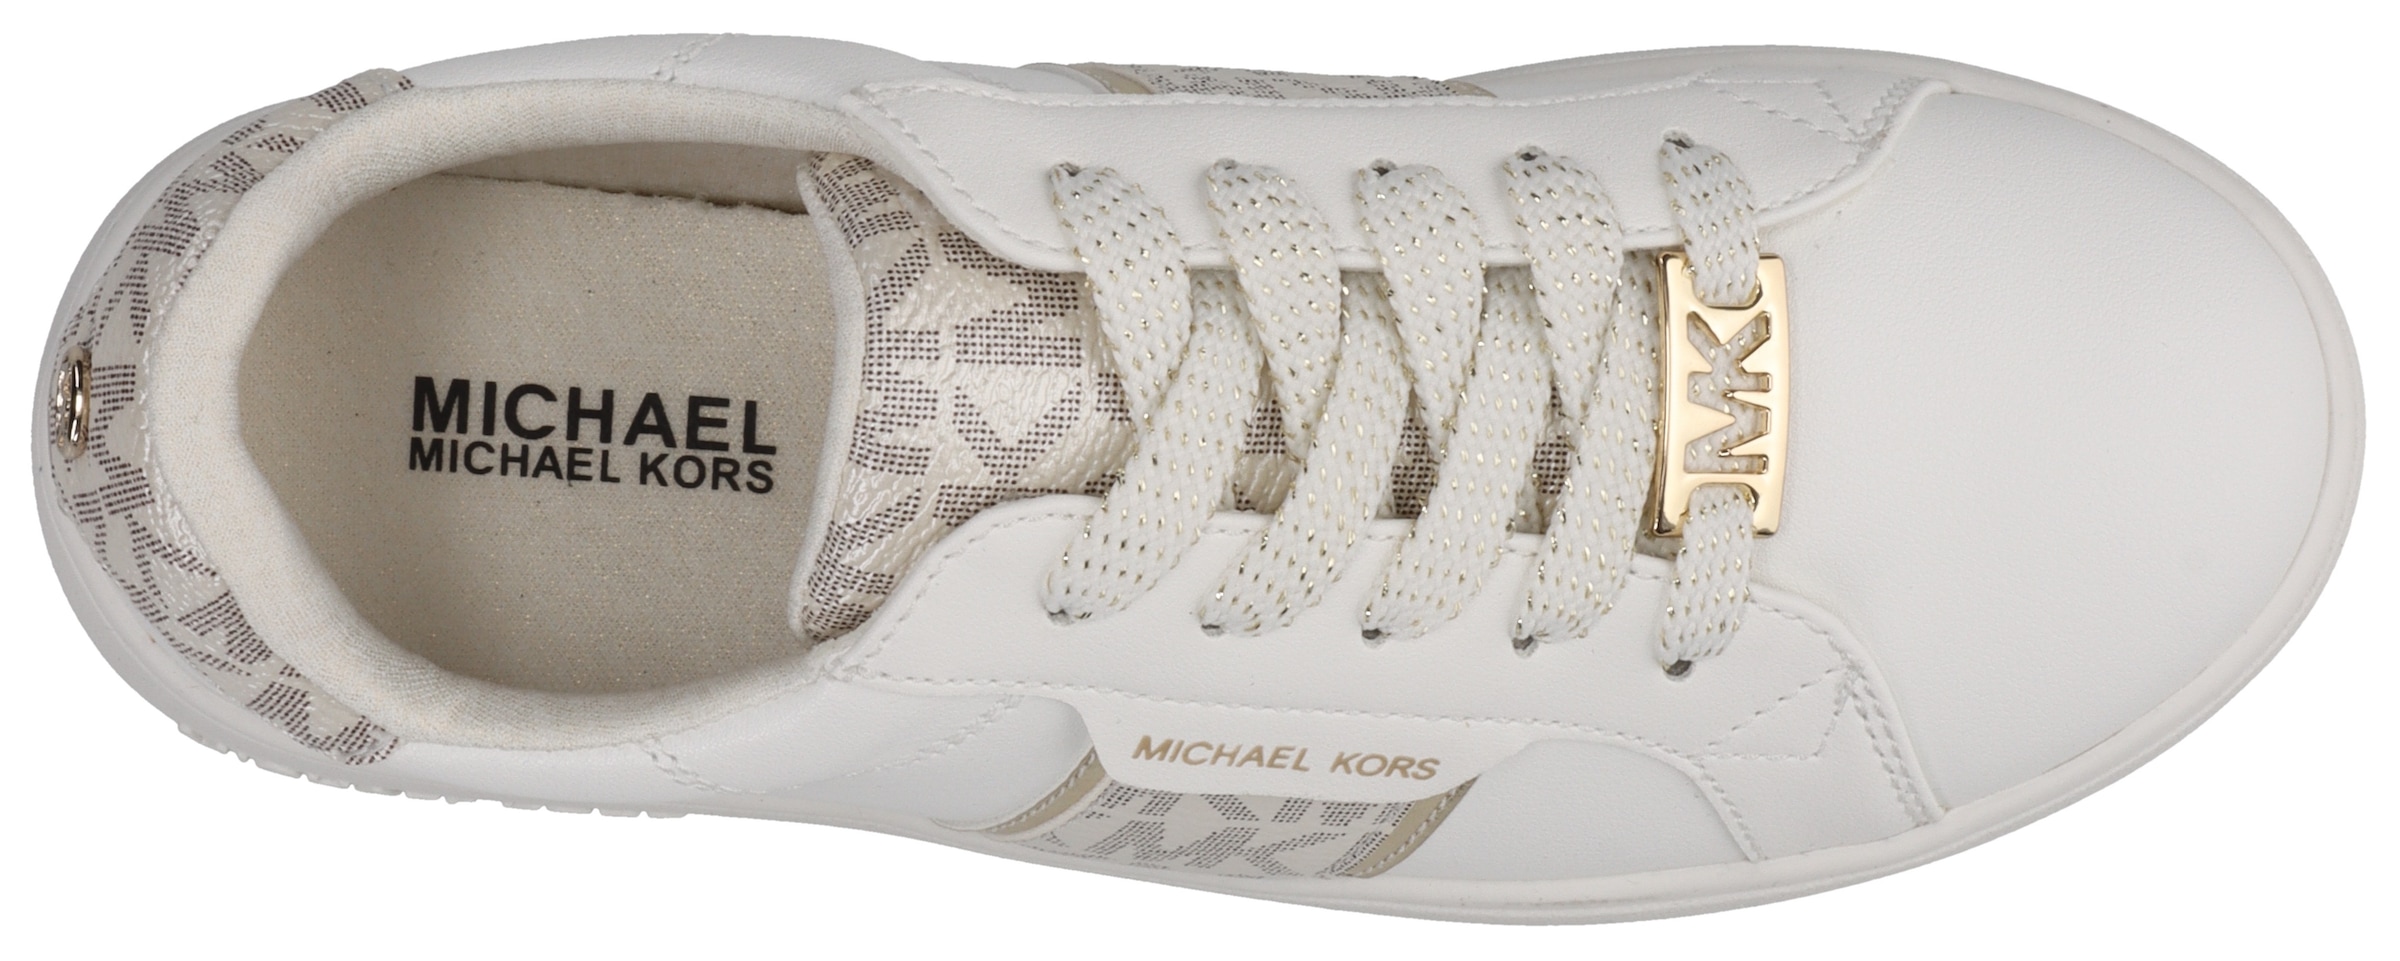 MICHAEL KORS KIDS Sneaker »JEM MAXINE«, mit Michael Kors Monogramm, Freizeitschuh, Halbschuh, Schnürschuh